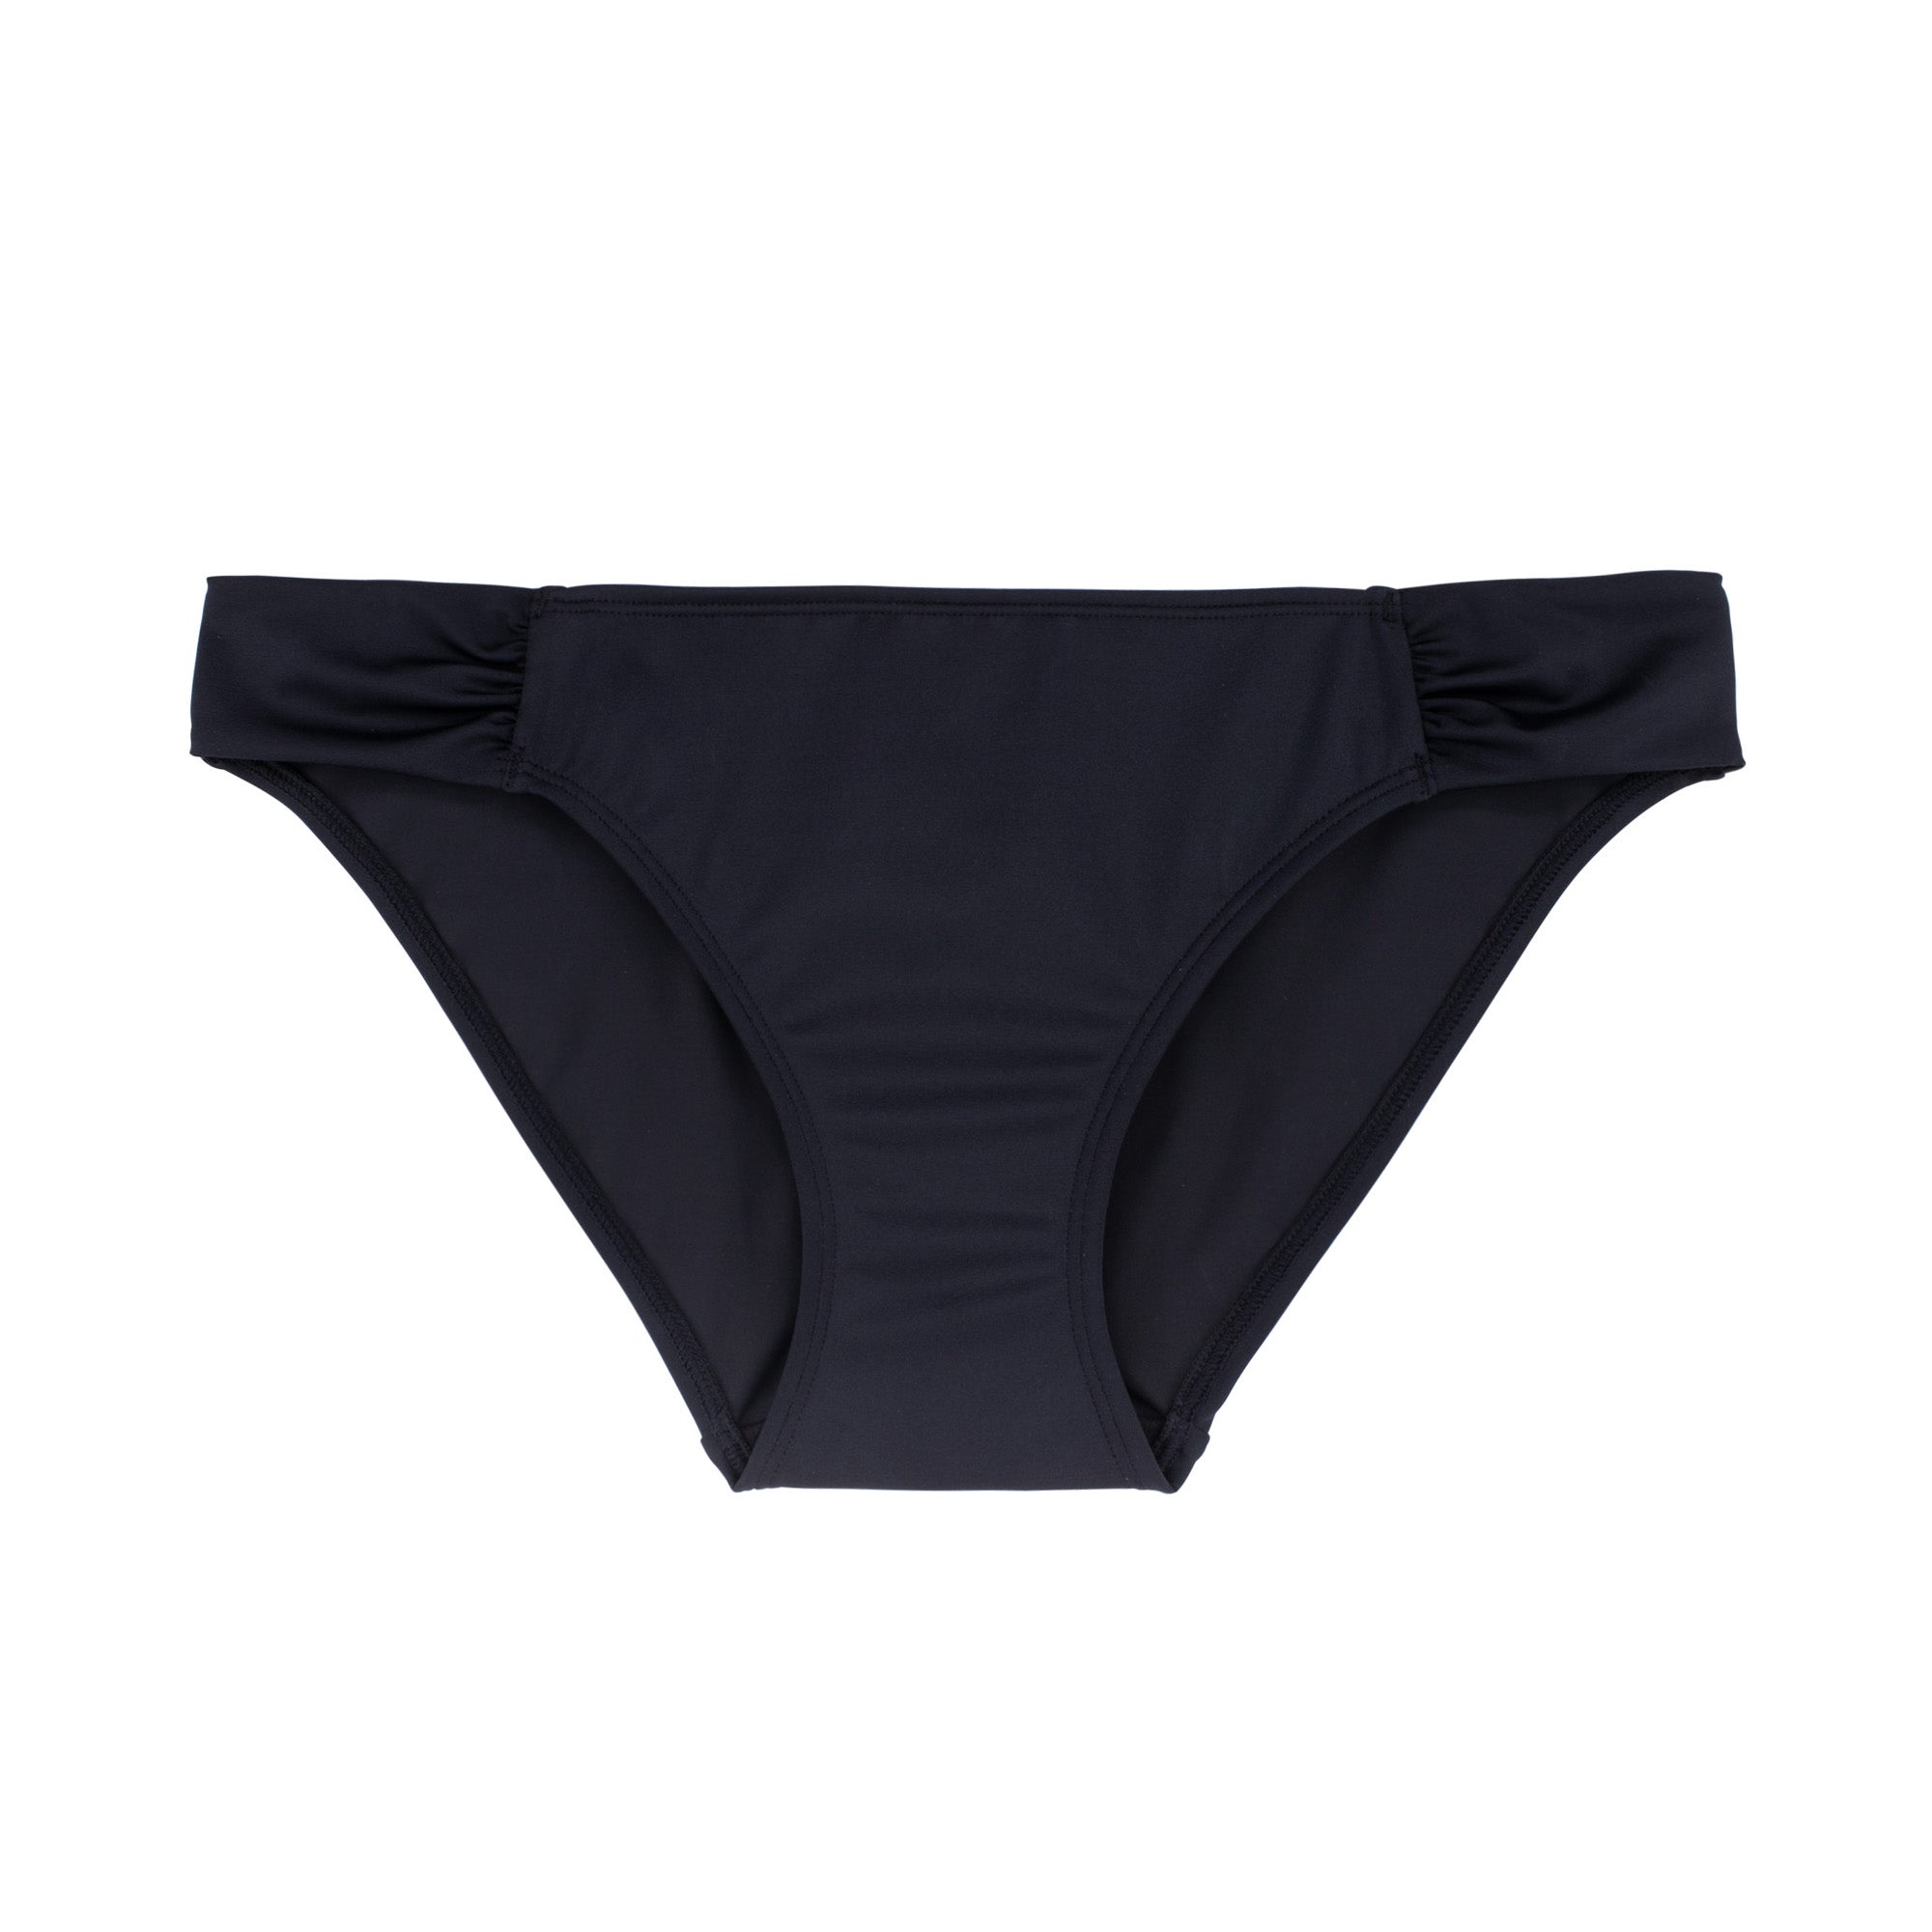 DORINA AZORES Brief Women's Briefs Swimwear Black D001704MI010-BK0001